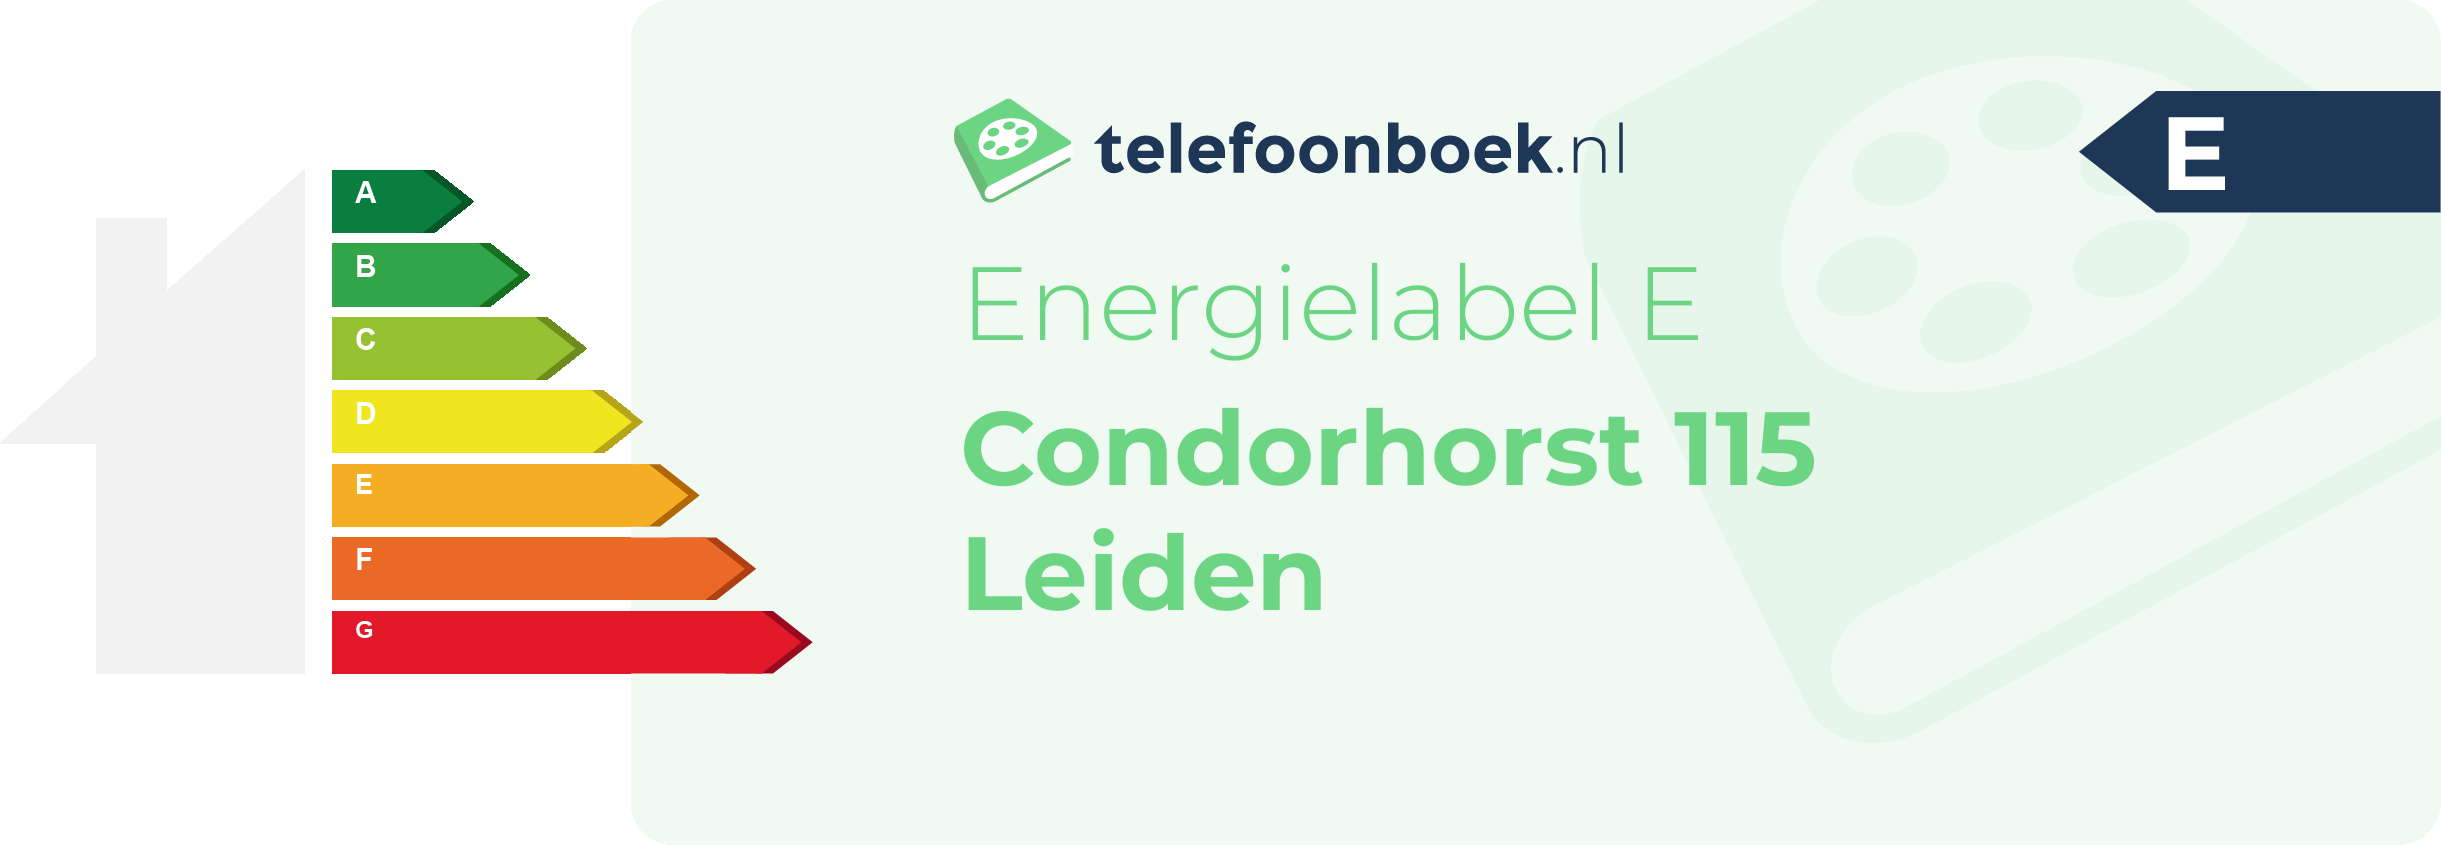 Energielabel Condorhorst 115 Leiden